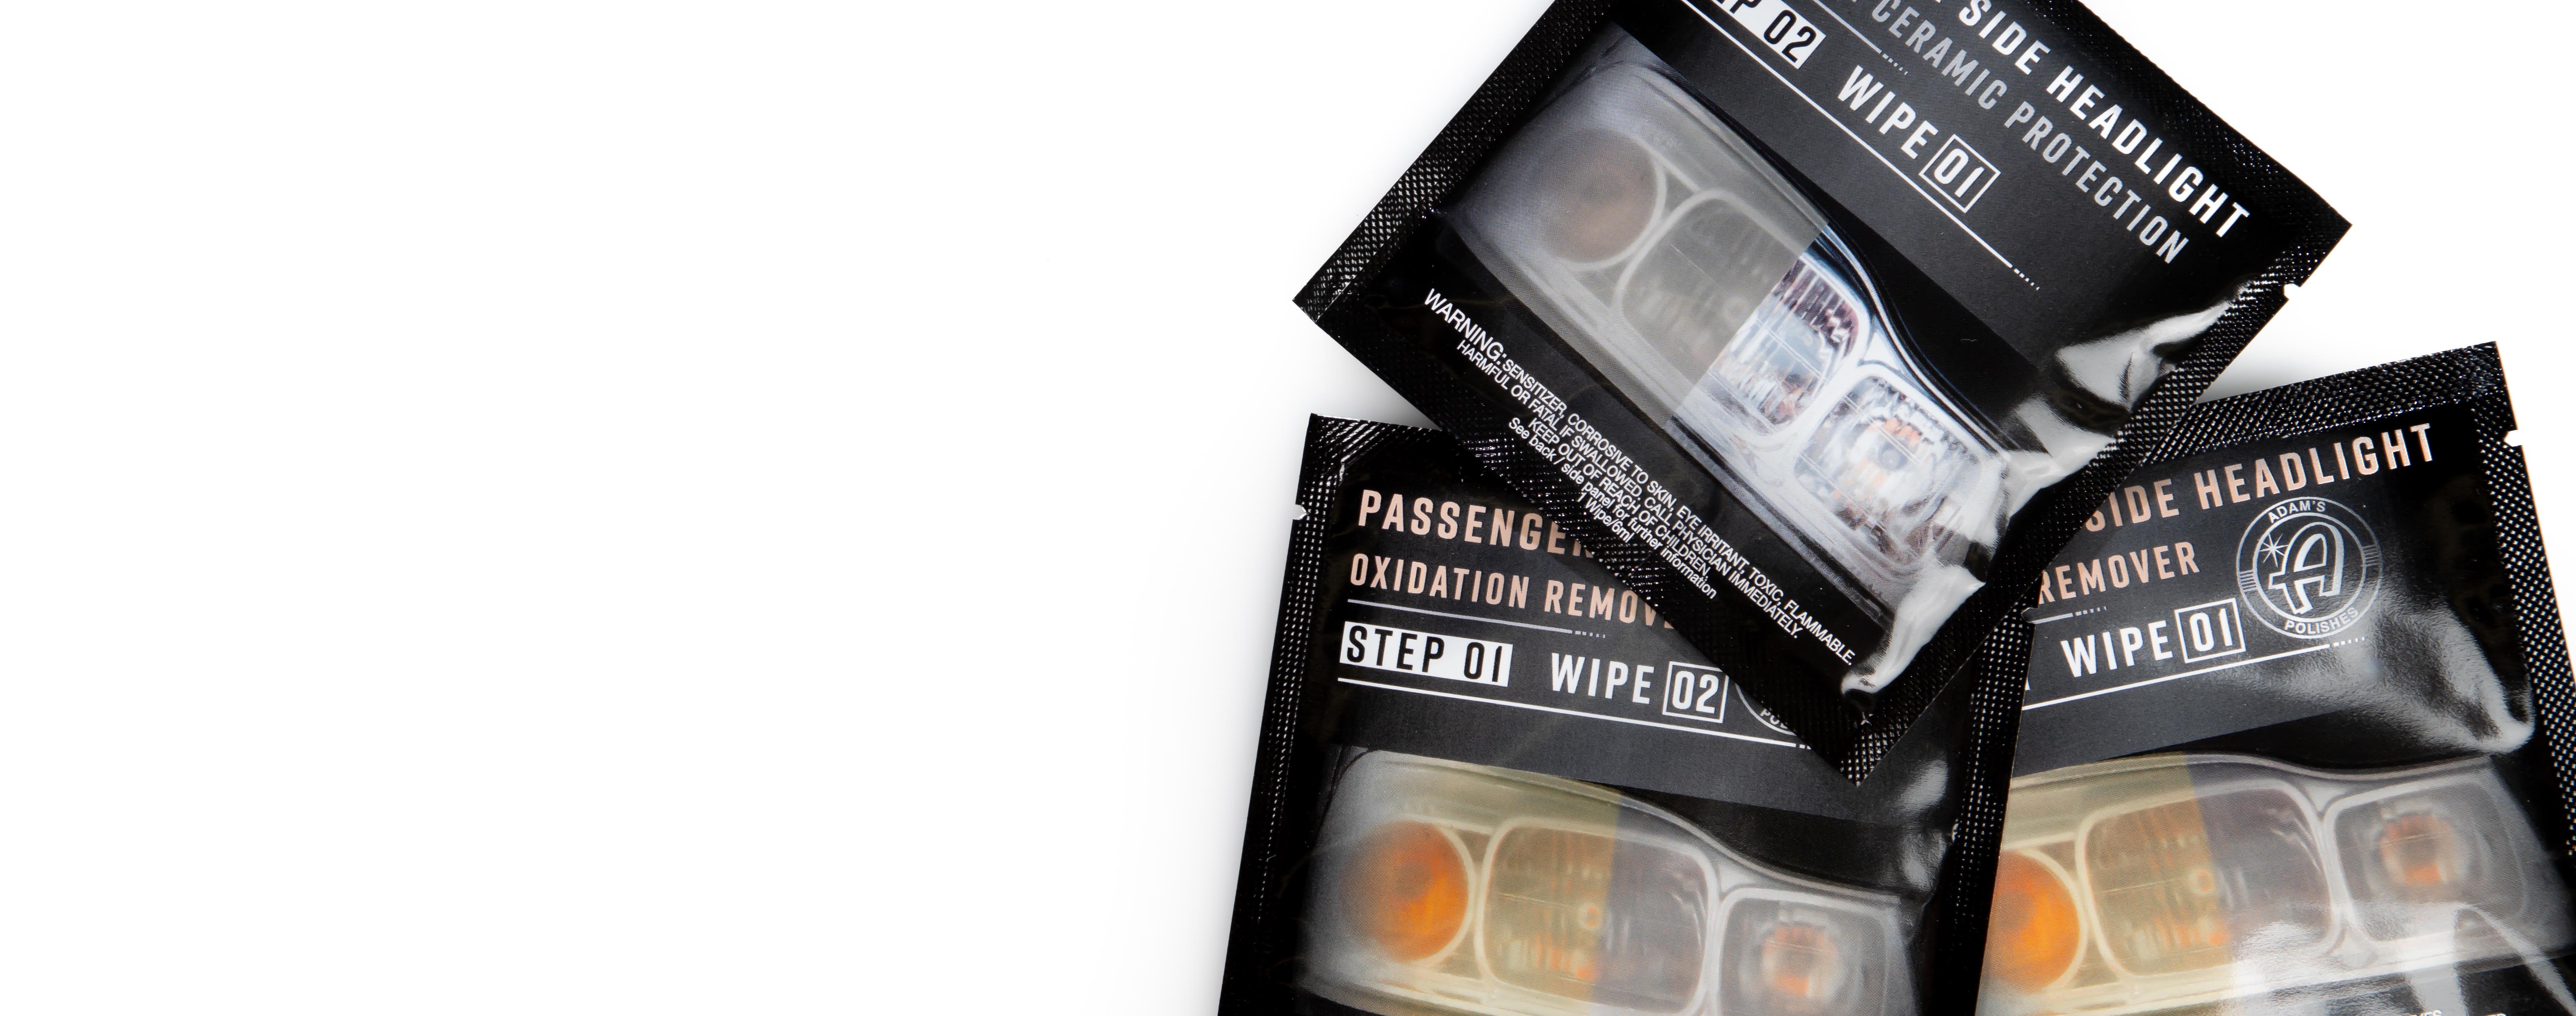 Headlight Restoration Kits  Sandpaper Pads, Lens Polishes, Wipes